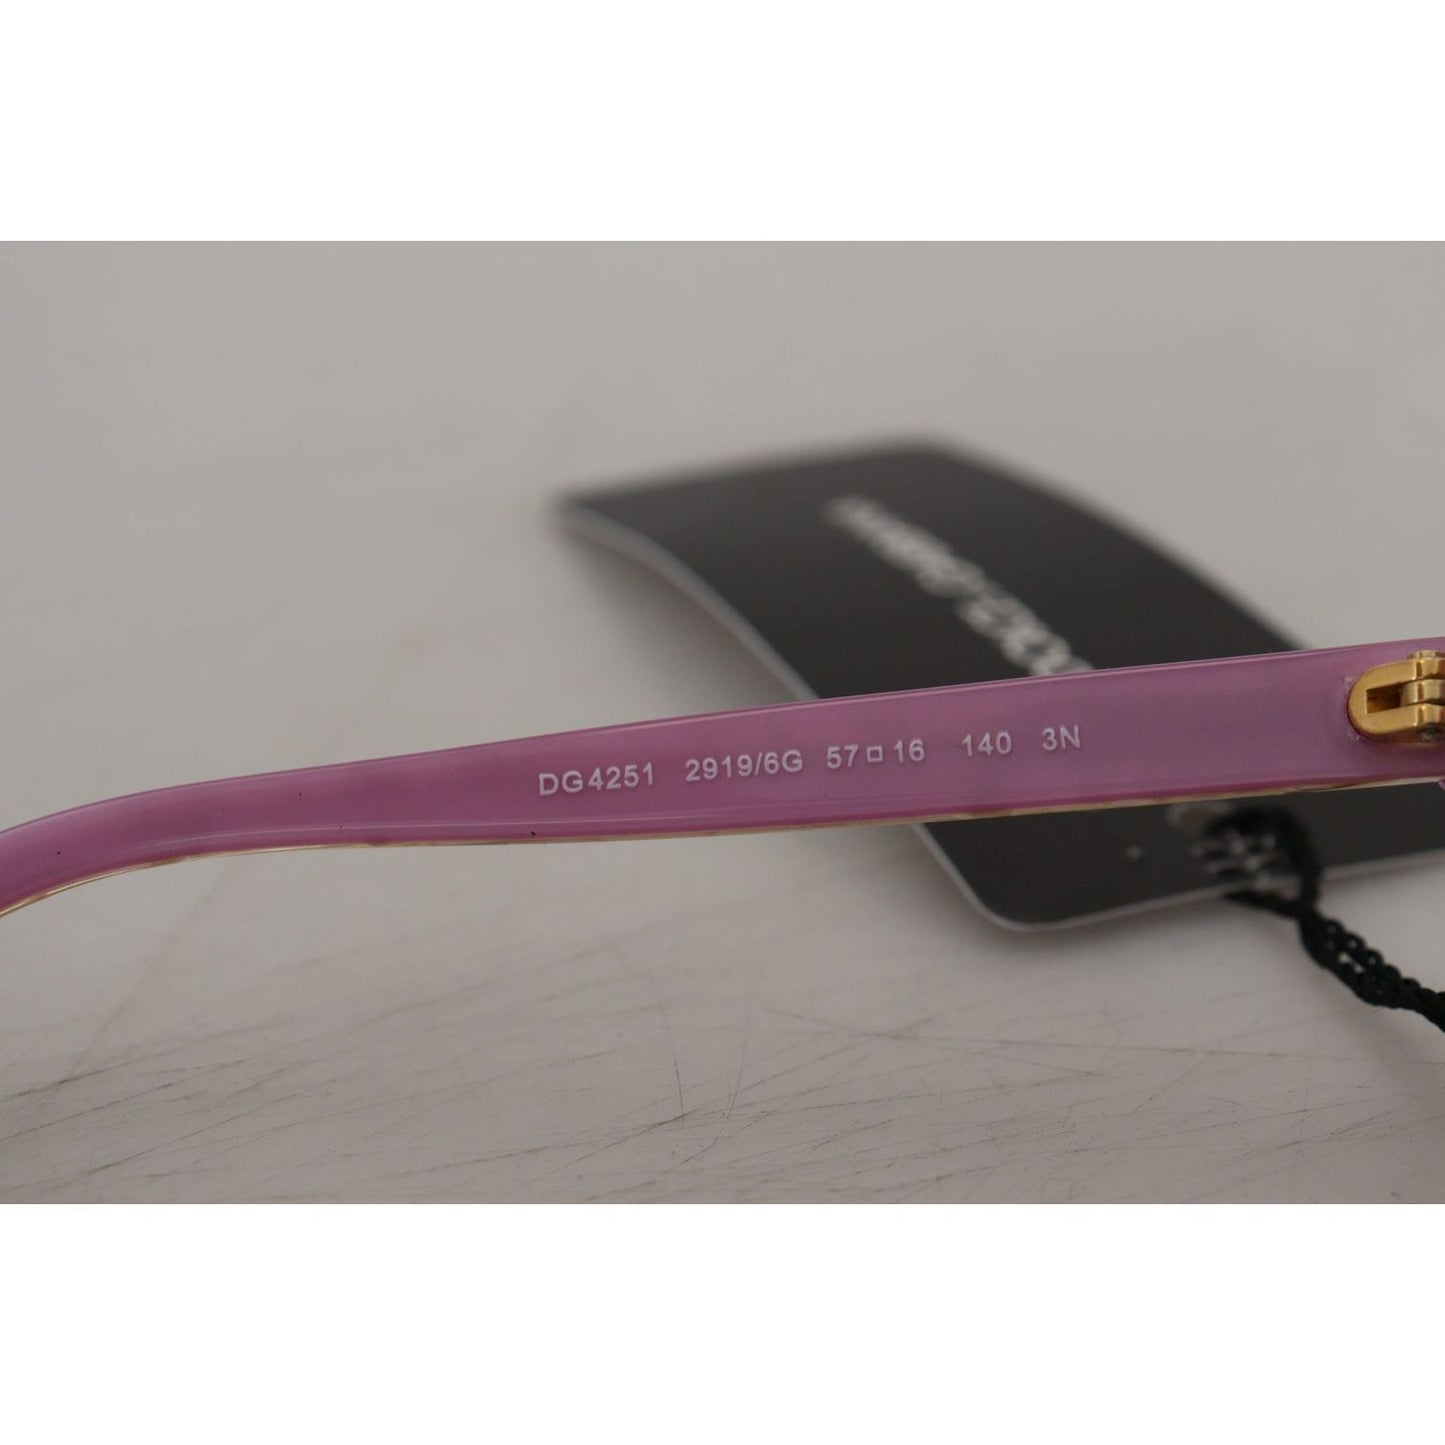 Dolce & Gabbana Elegant Violet Acetate Sunglasses violet-full-rim-rectangle-frame-shades-dg4251-sunglasses IMG_5190-scaled-2a56e85c-51c.jpg